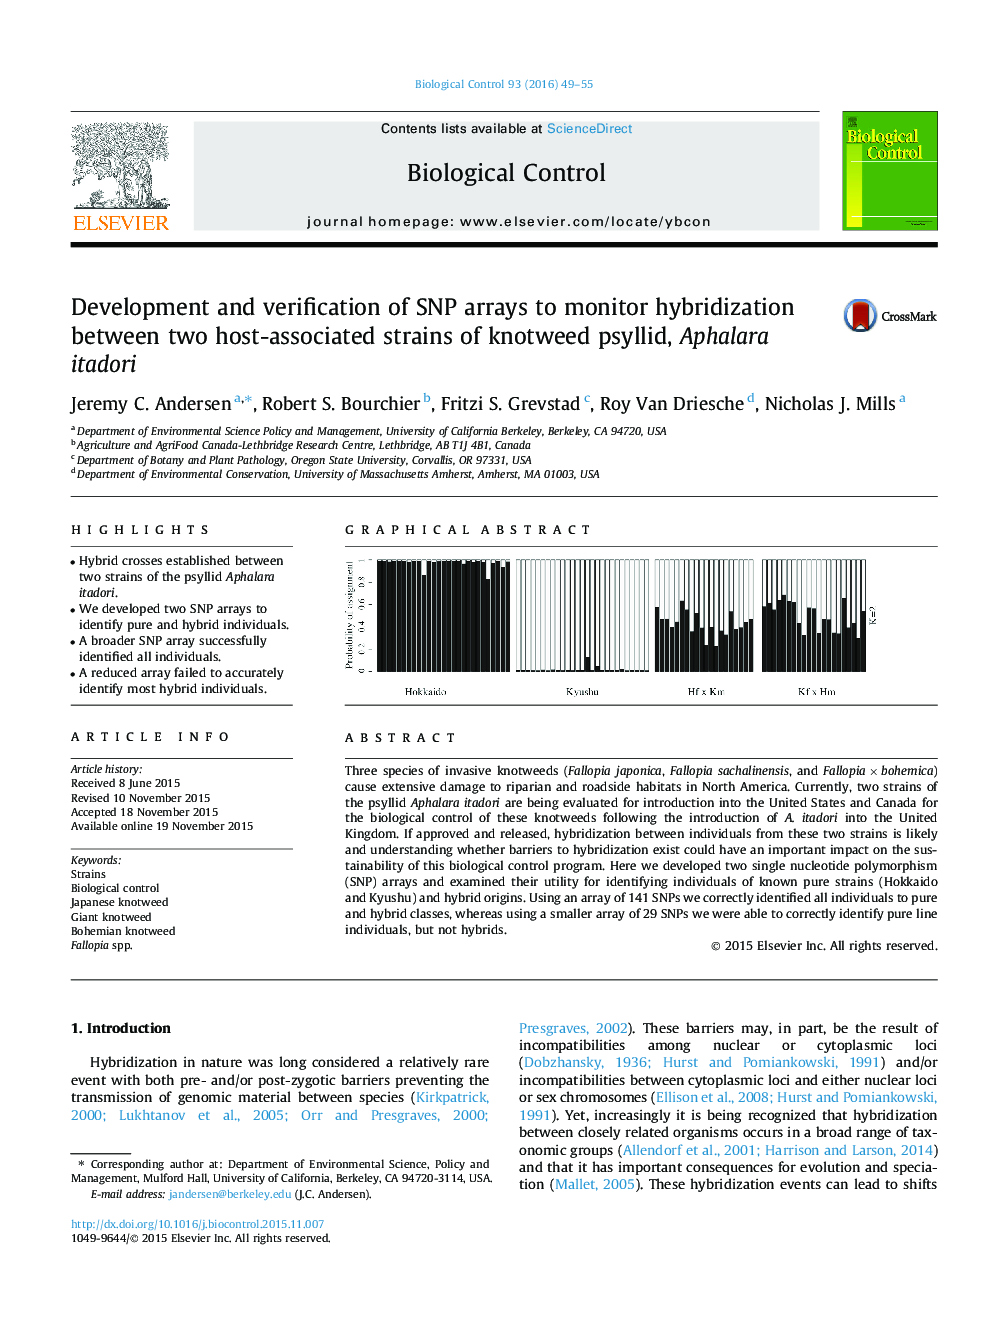 Development and verification of SNP arrays to monitor hybridization between two host-associated strains of knotweed psyllid, Aphalara itadori